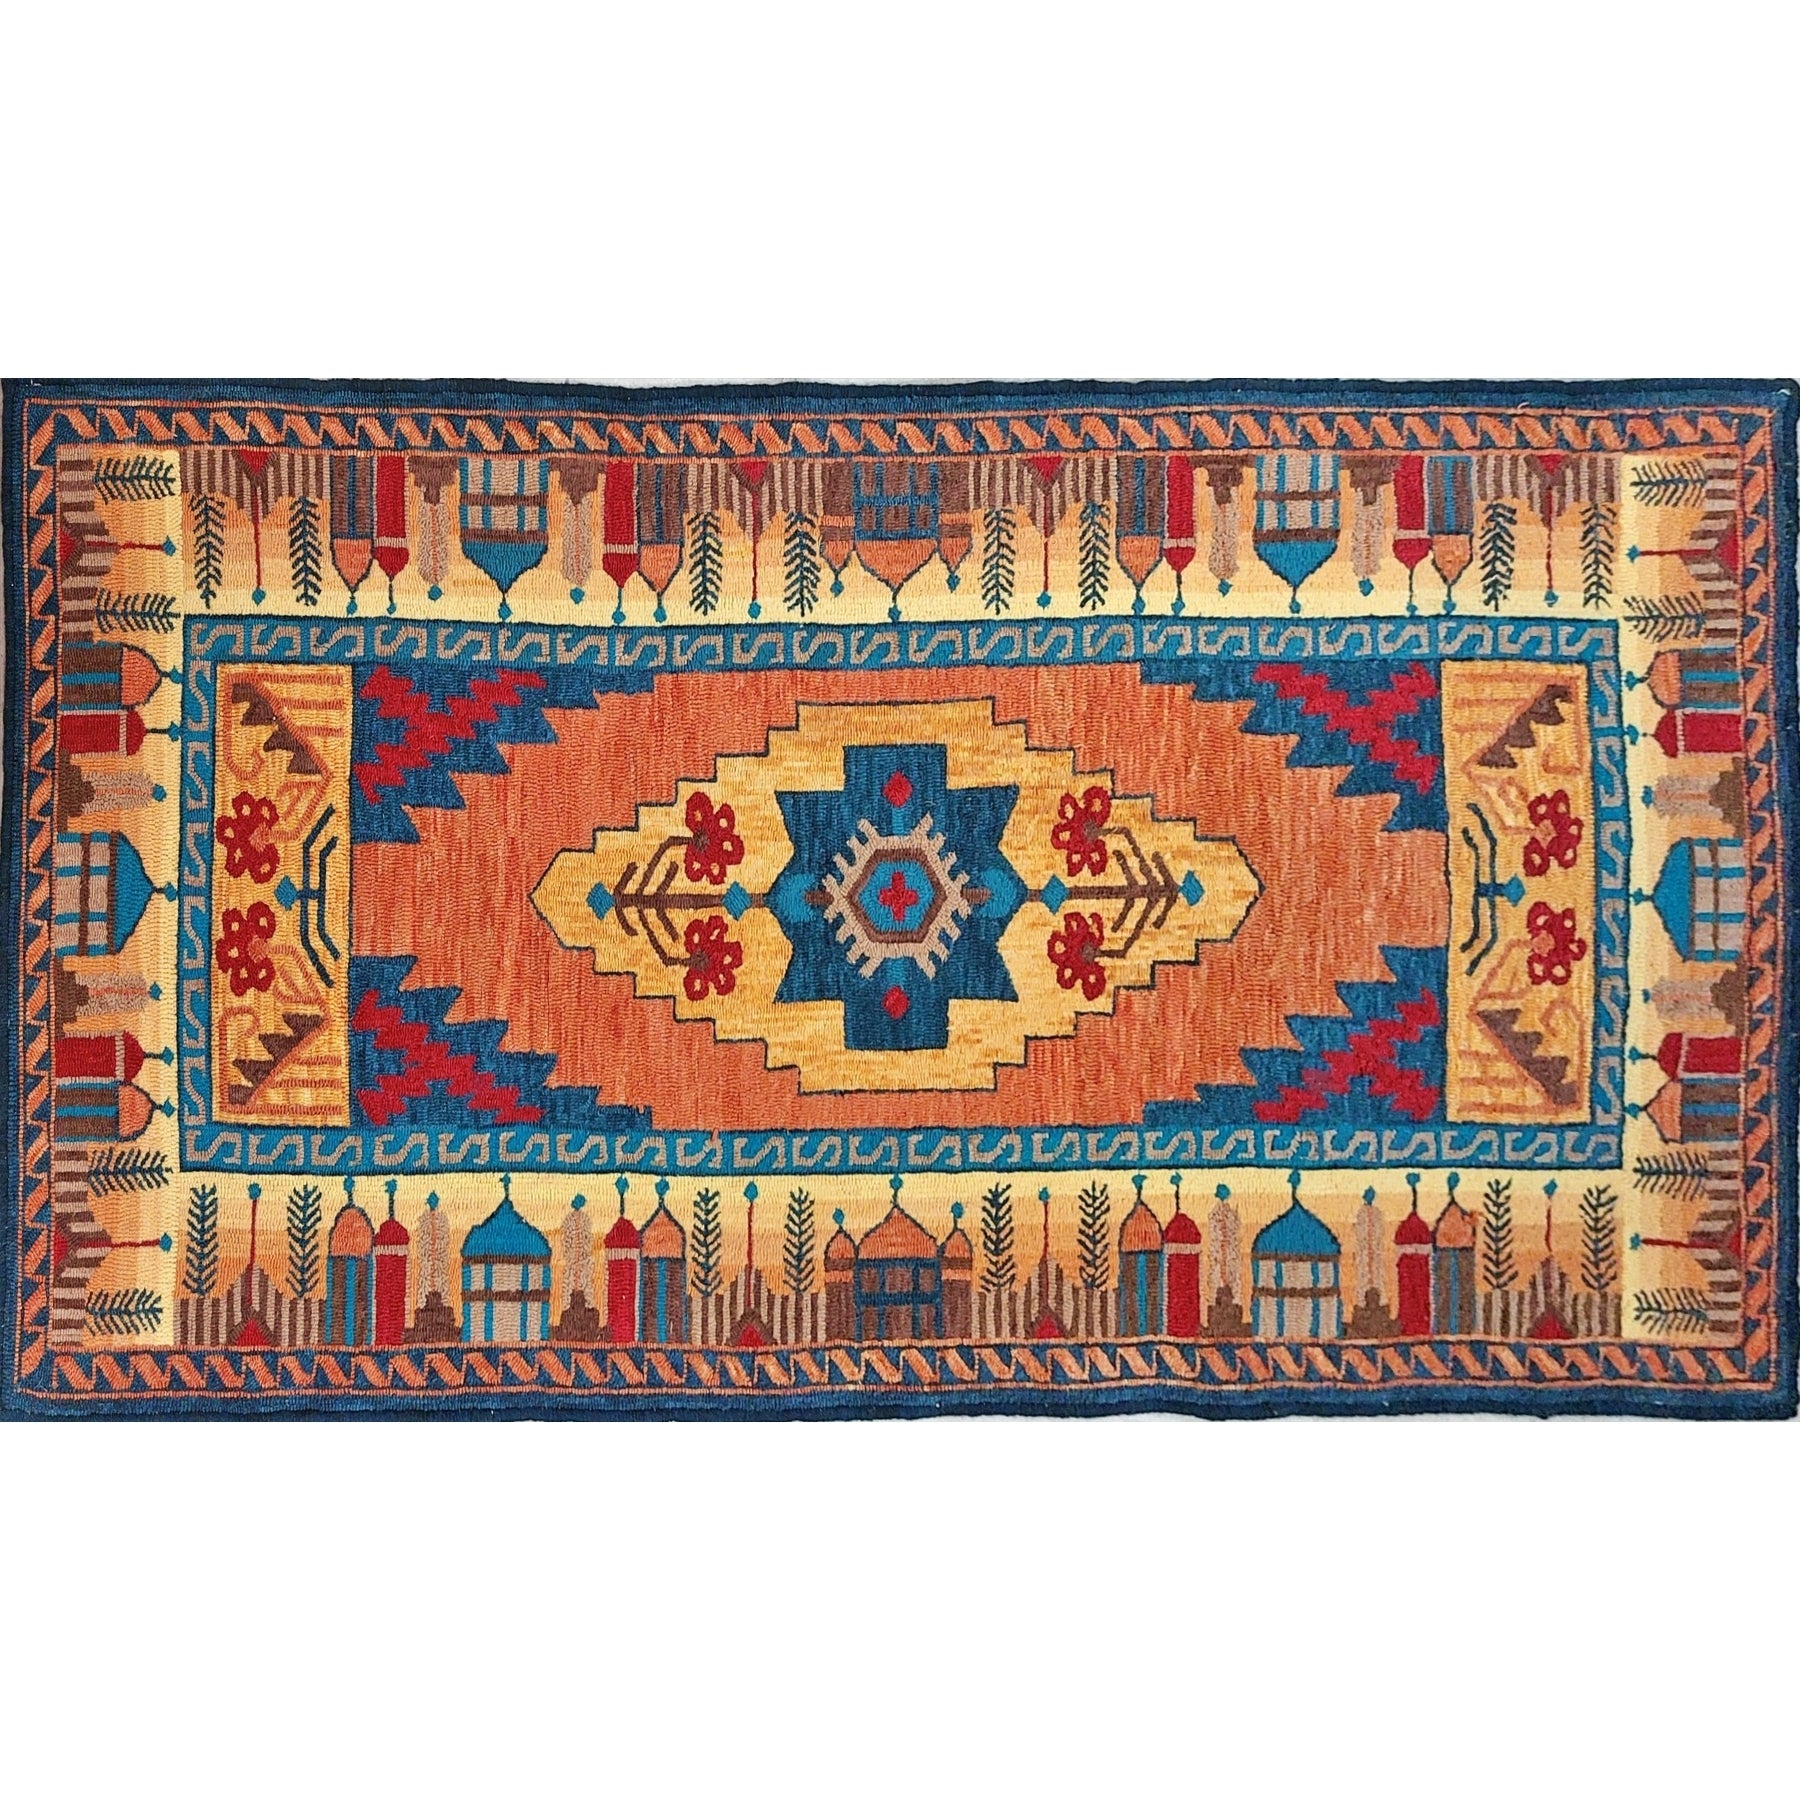 Anatolian Runner, rug hooked by Francine Birket